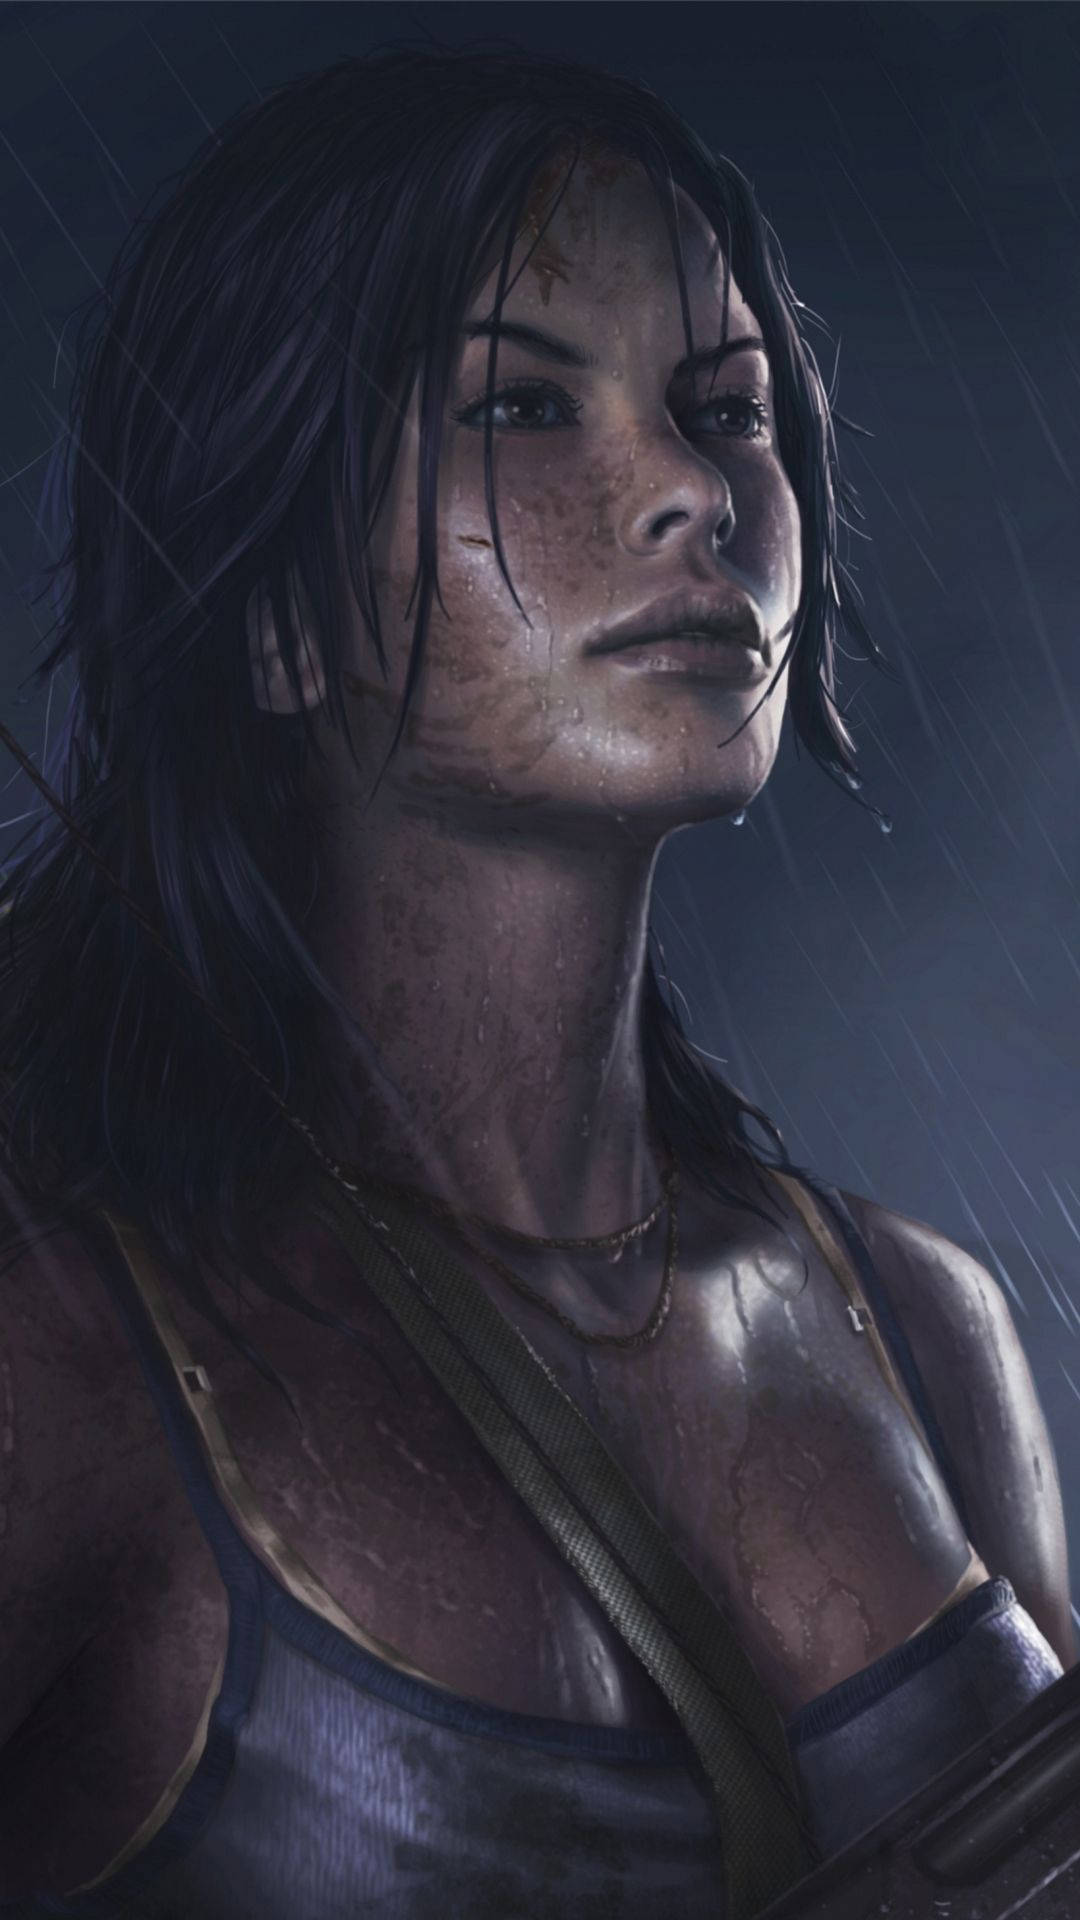 Papelde Parede Sexy Da Lara Croft, De Tomb Raider, Para Iphone. Papel de Parede